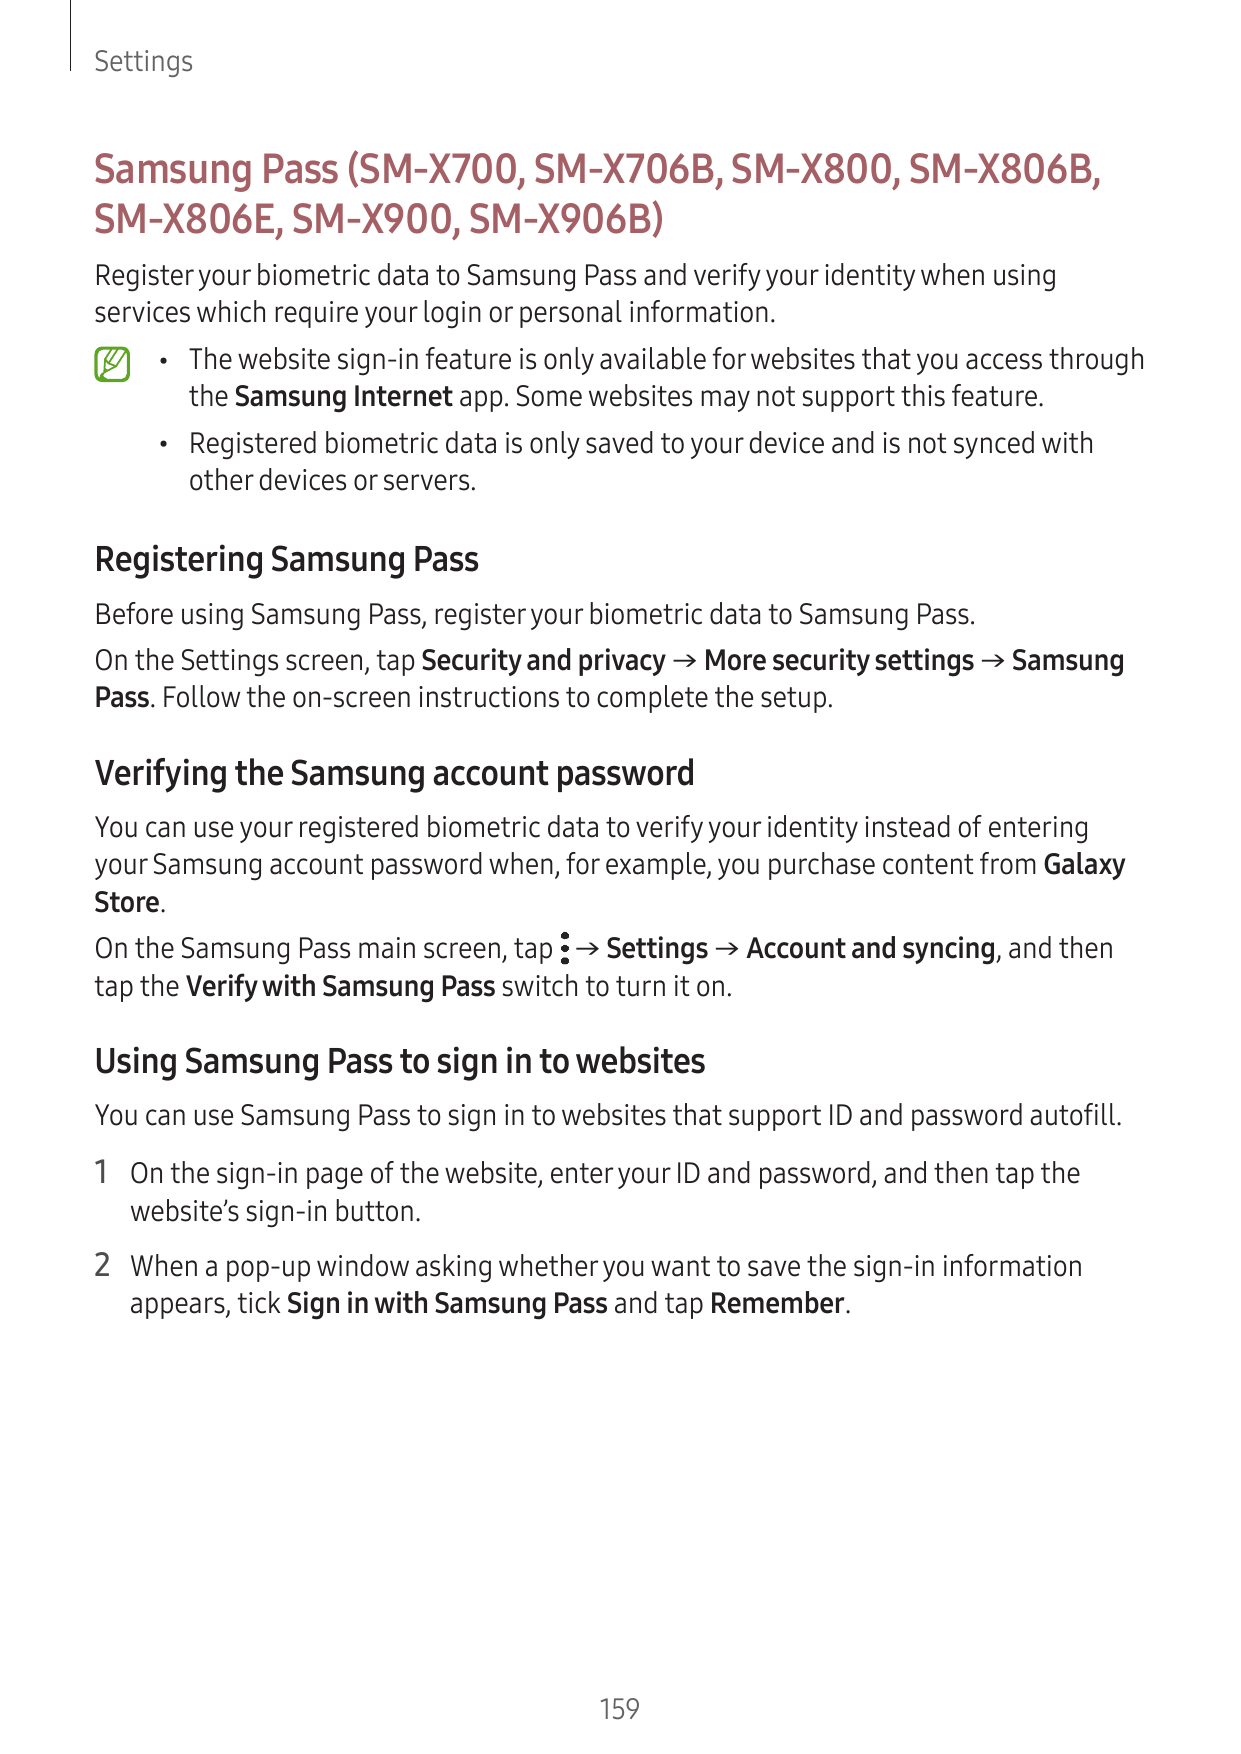 SettingsSamsung Pass (SM-X700, SM-X706B, SM-X800, SM-X806B,SM-X806E, SM-X900, SM-X906B)Register your biometric data to Samsung P